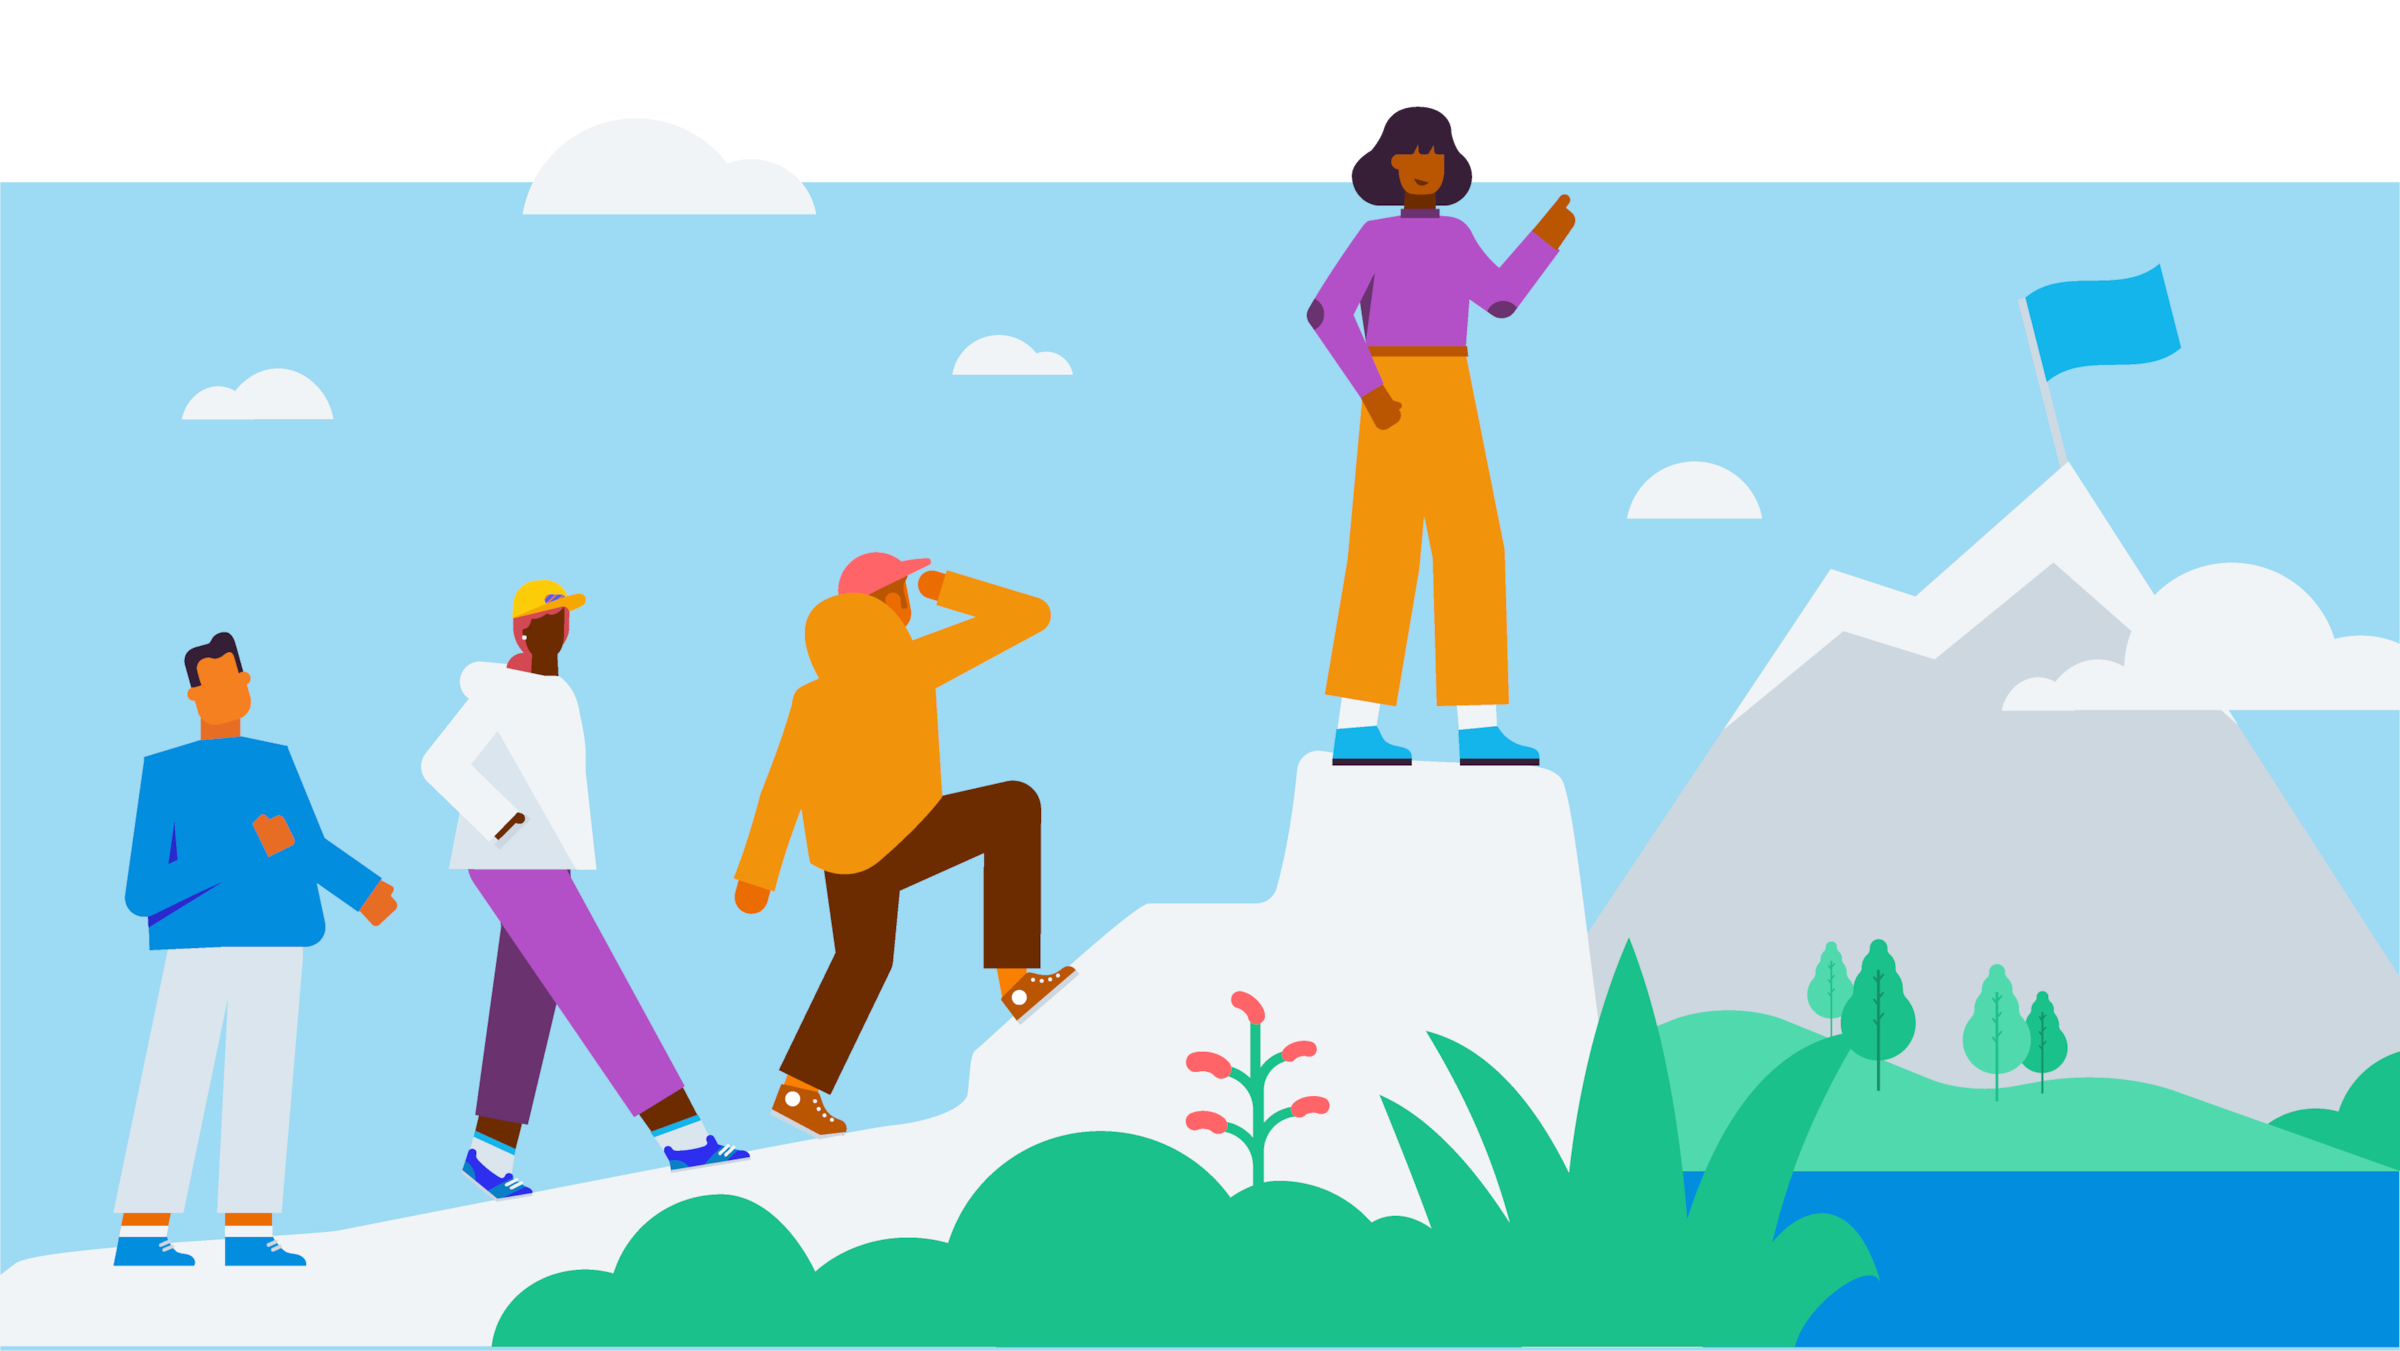 A small business team climbing a mountain